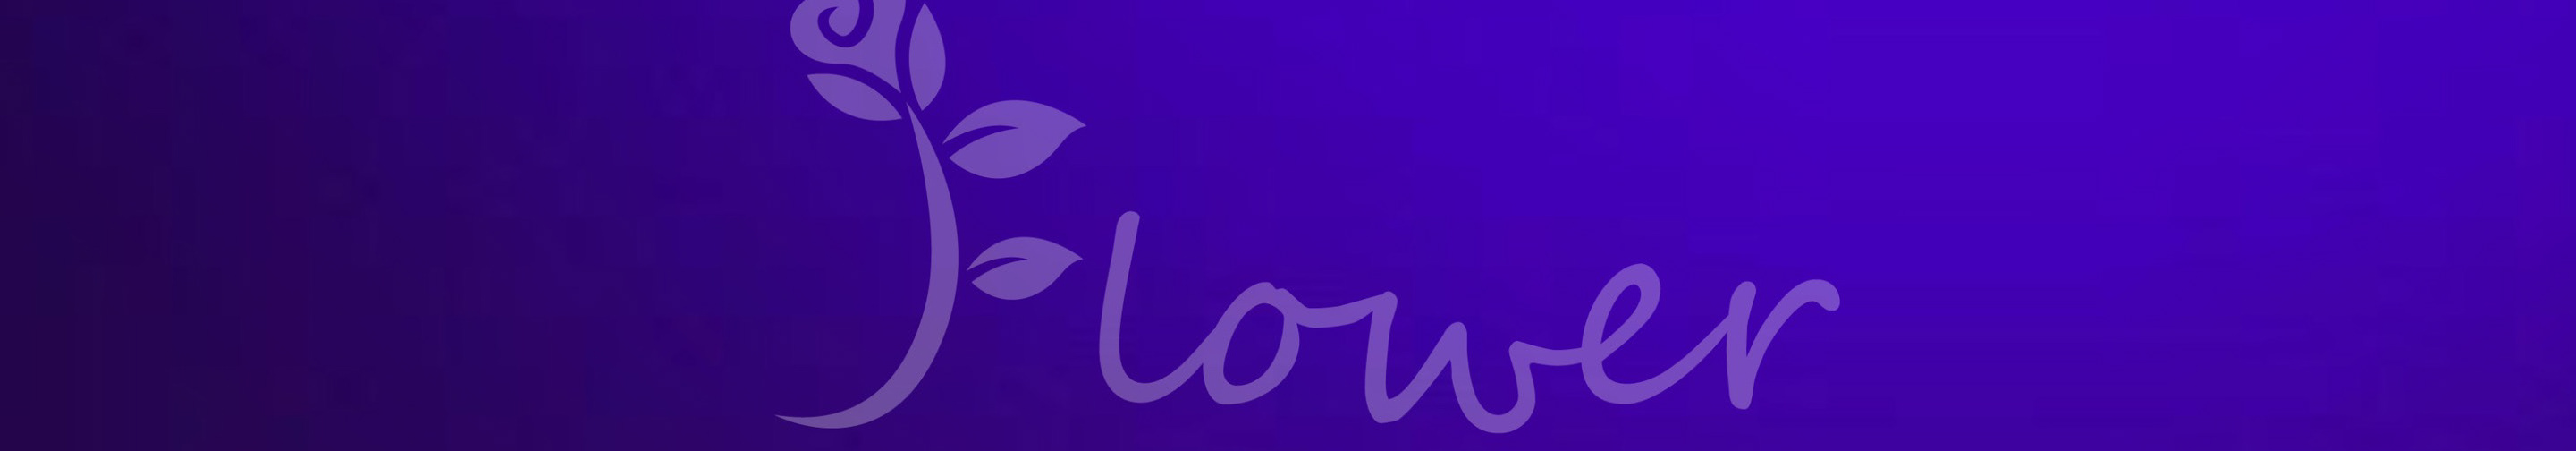 Florzinha ⠀'s profile banner